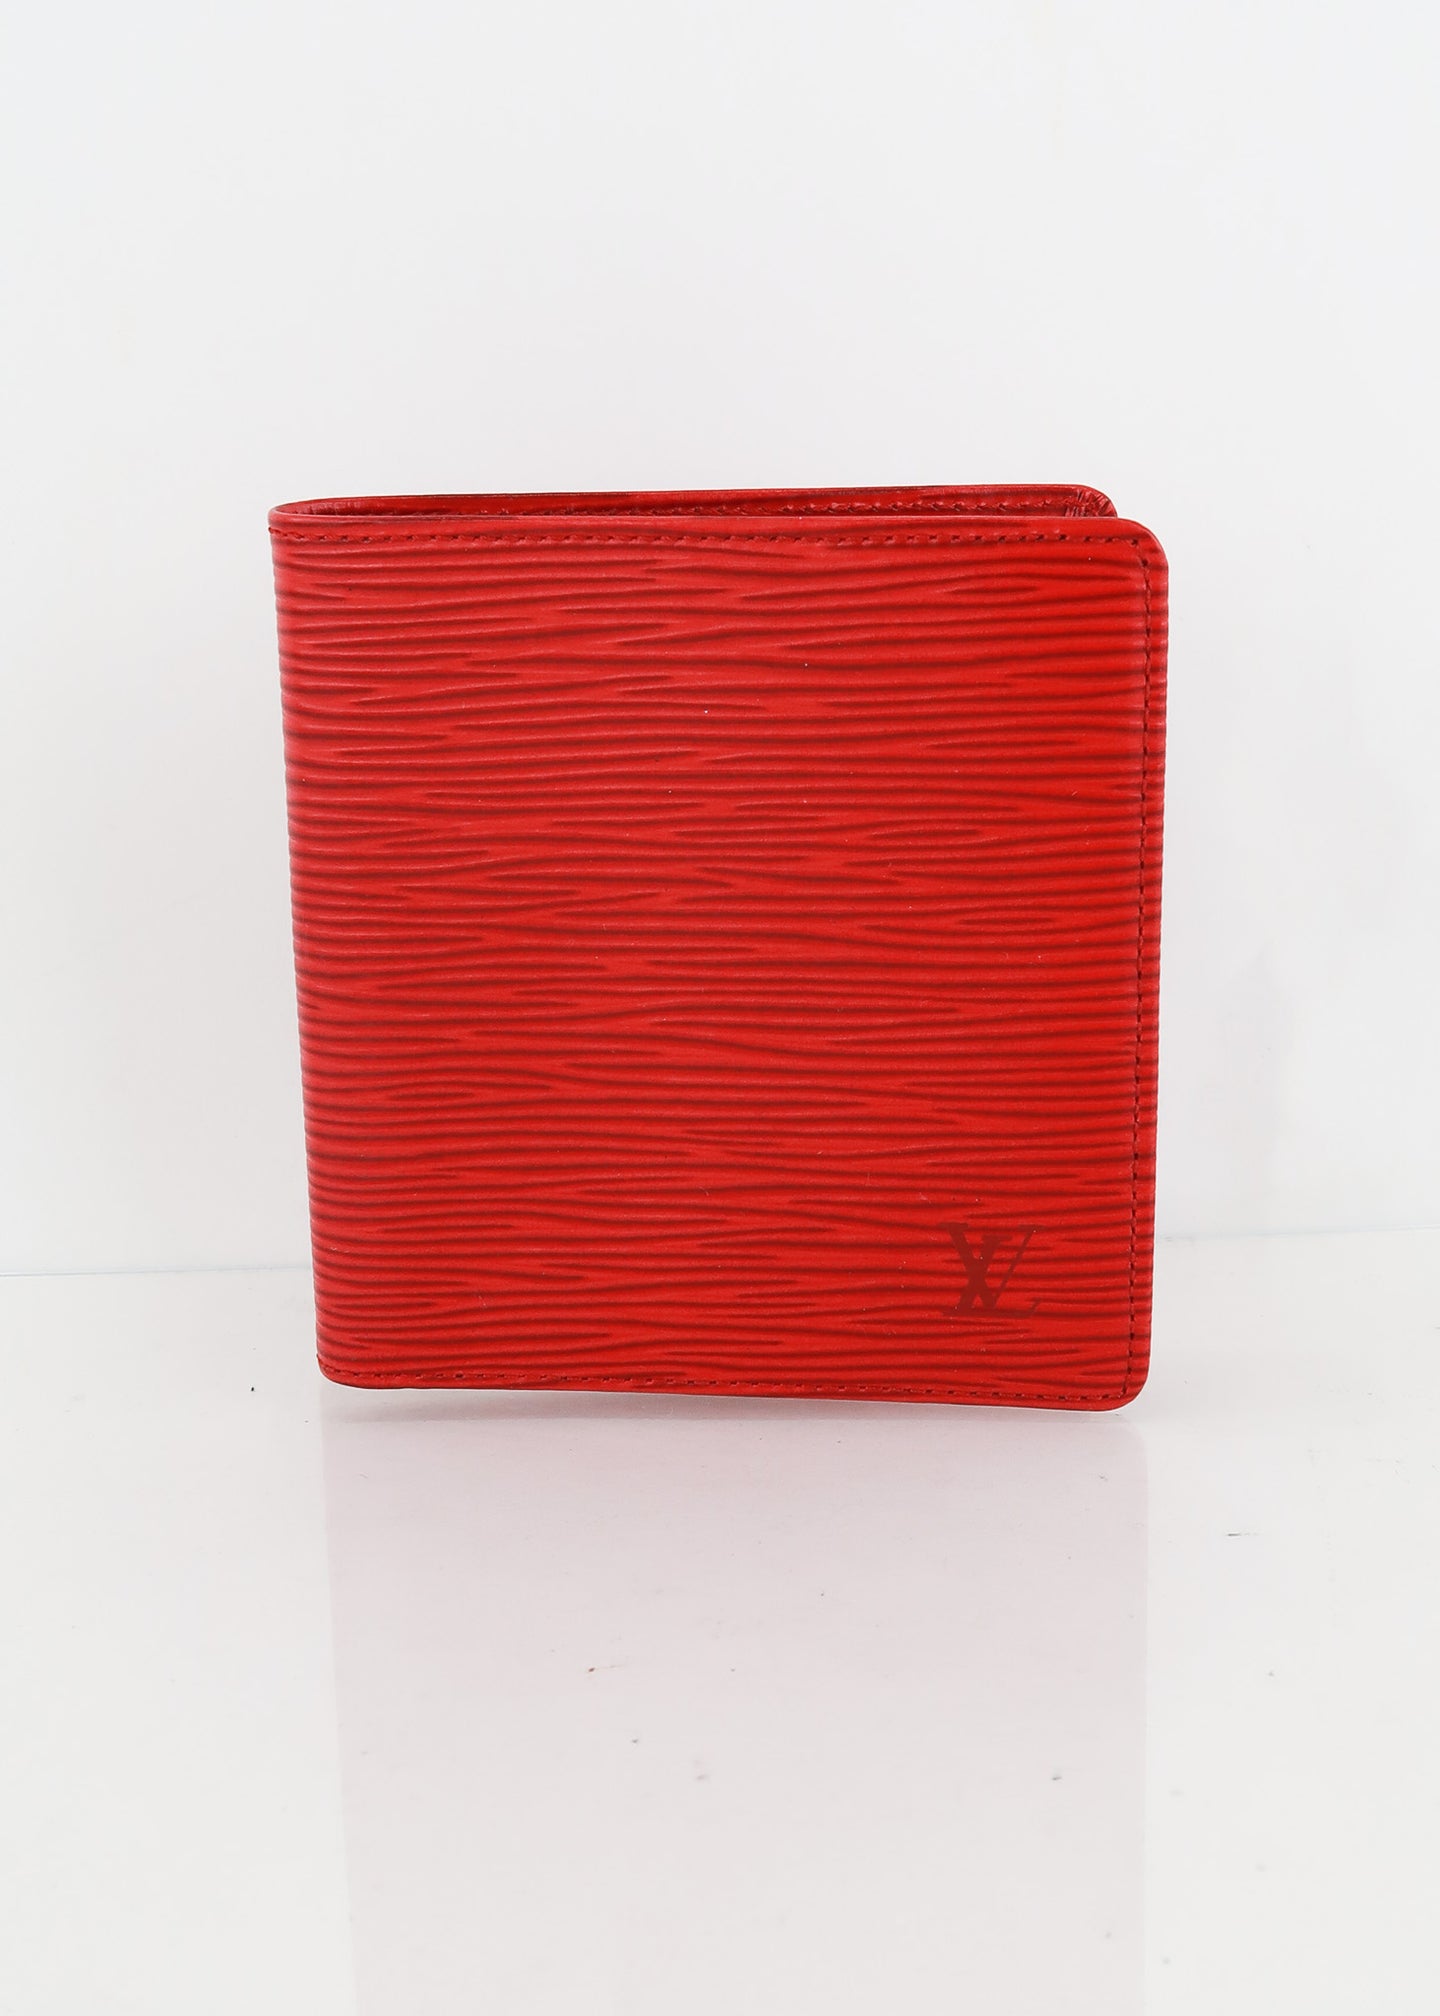 red epi leather louis-vuitton wallet